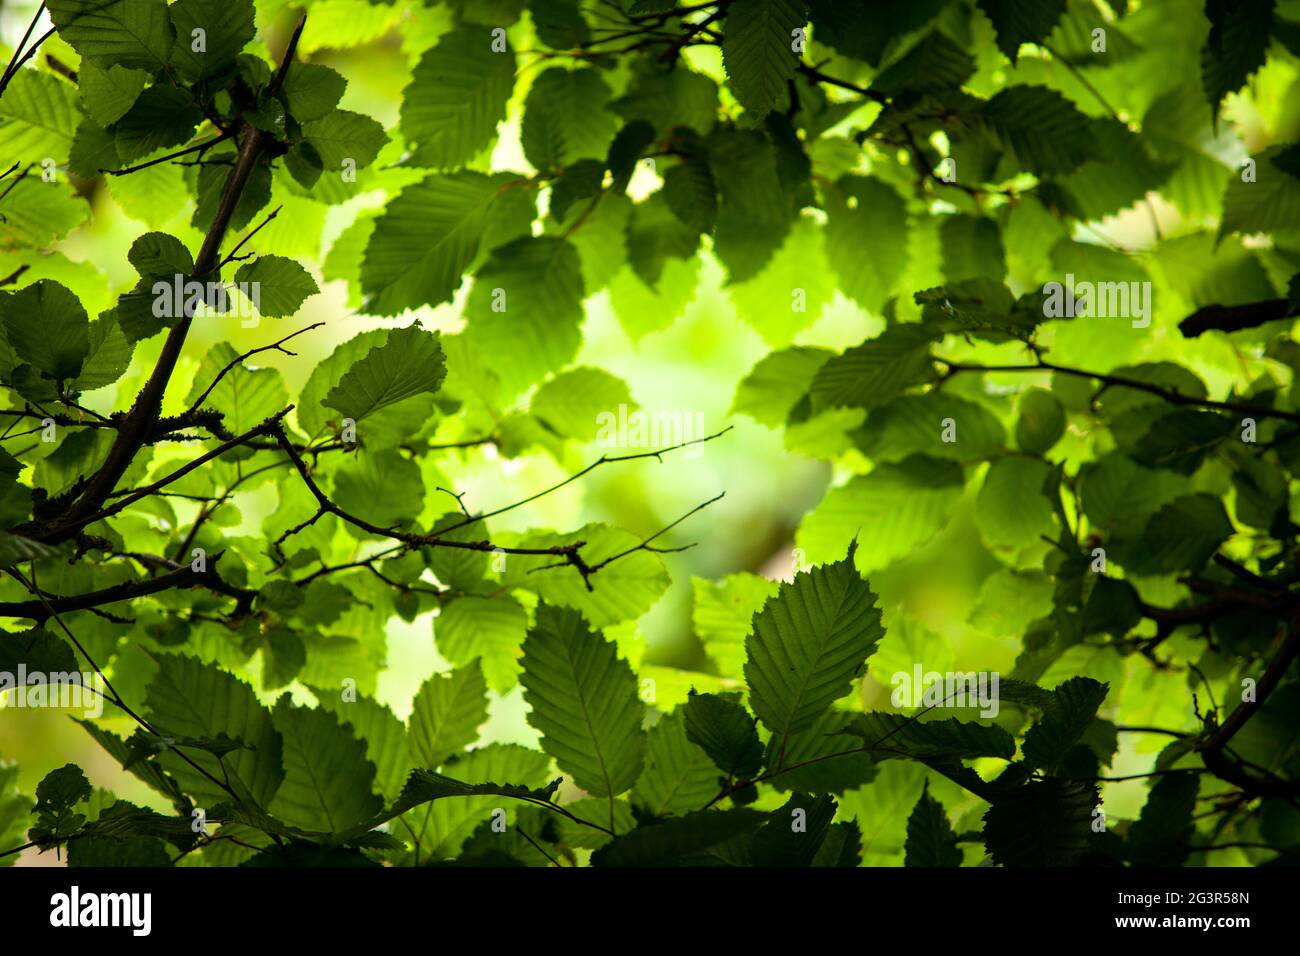 The light of the sun breaks through the dense foliage. Stock Photo